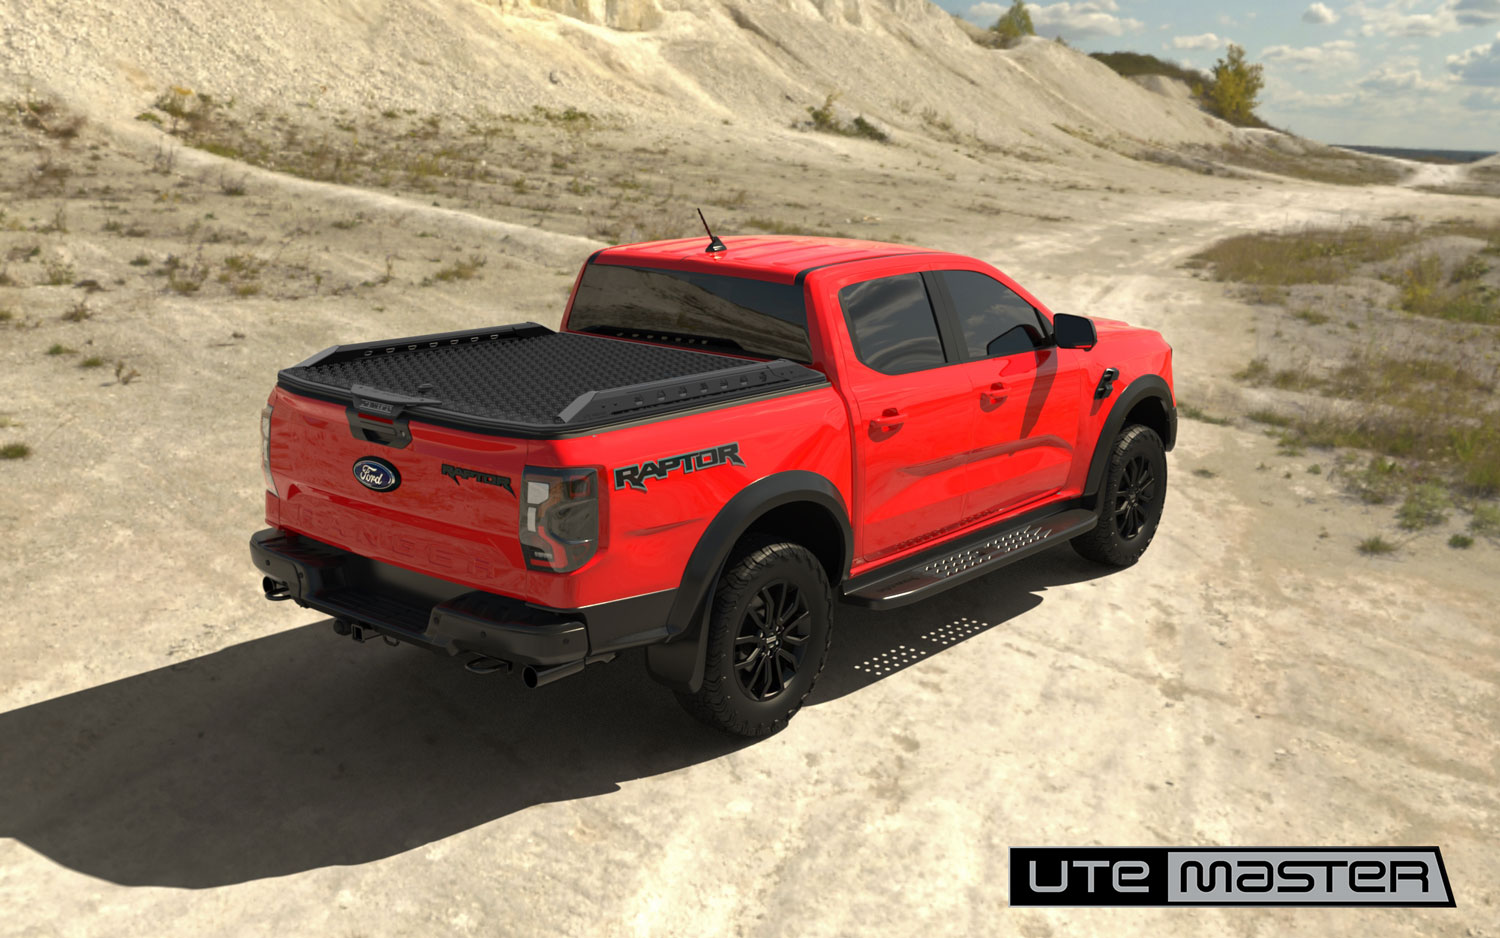 New 2022 Ford Ranger Raptor Accessories Hard Lid Load LId Utemaster Red Black Offroad Best Tough Tub Ute Lid